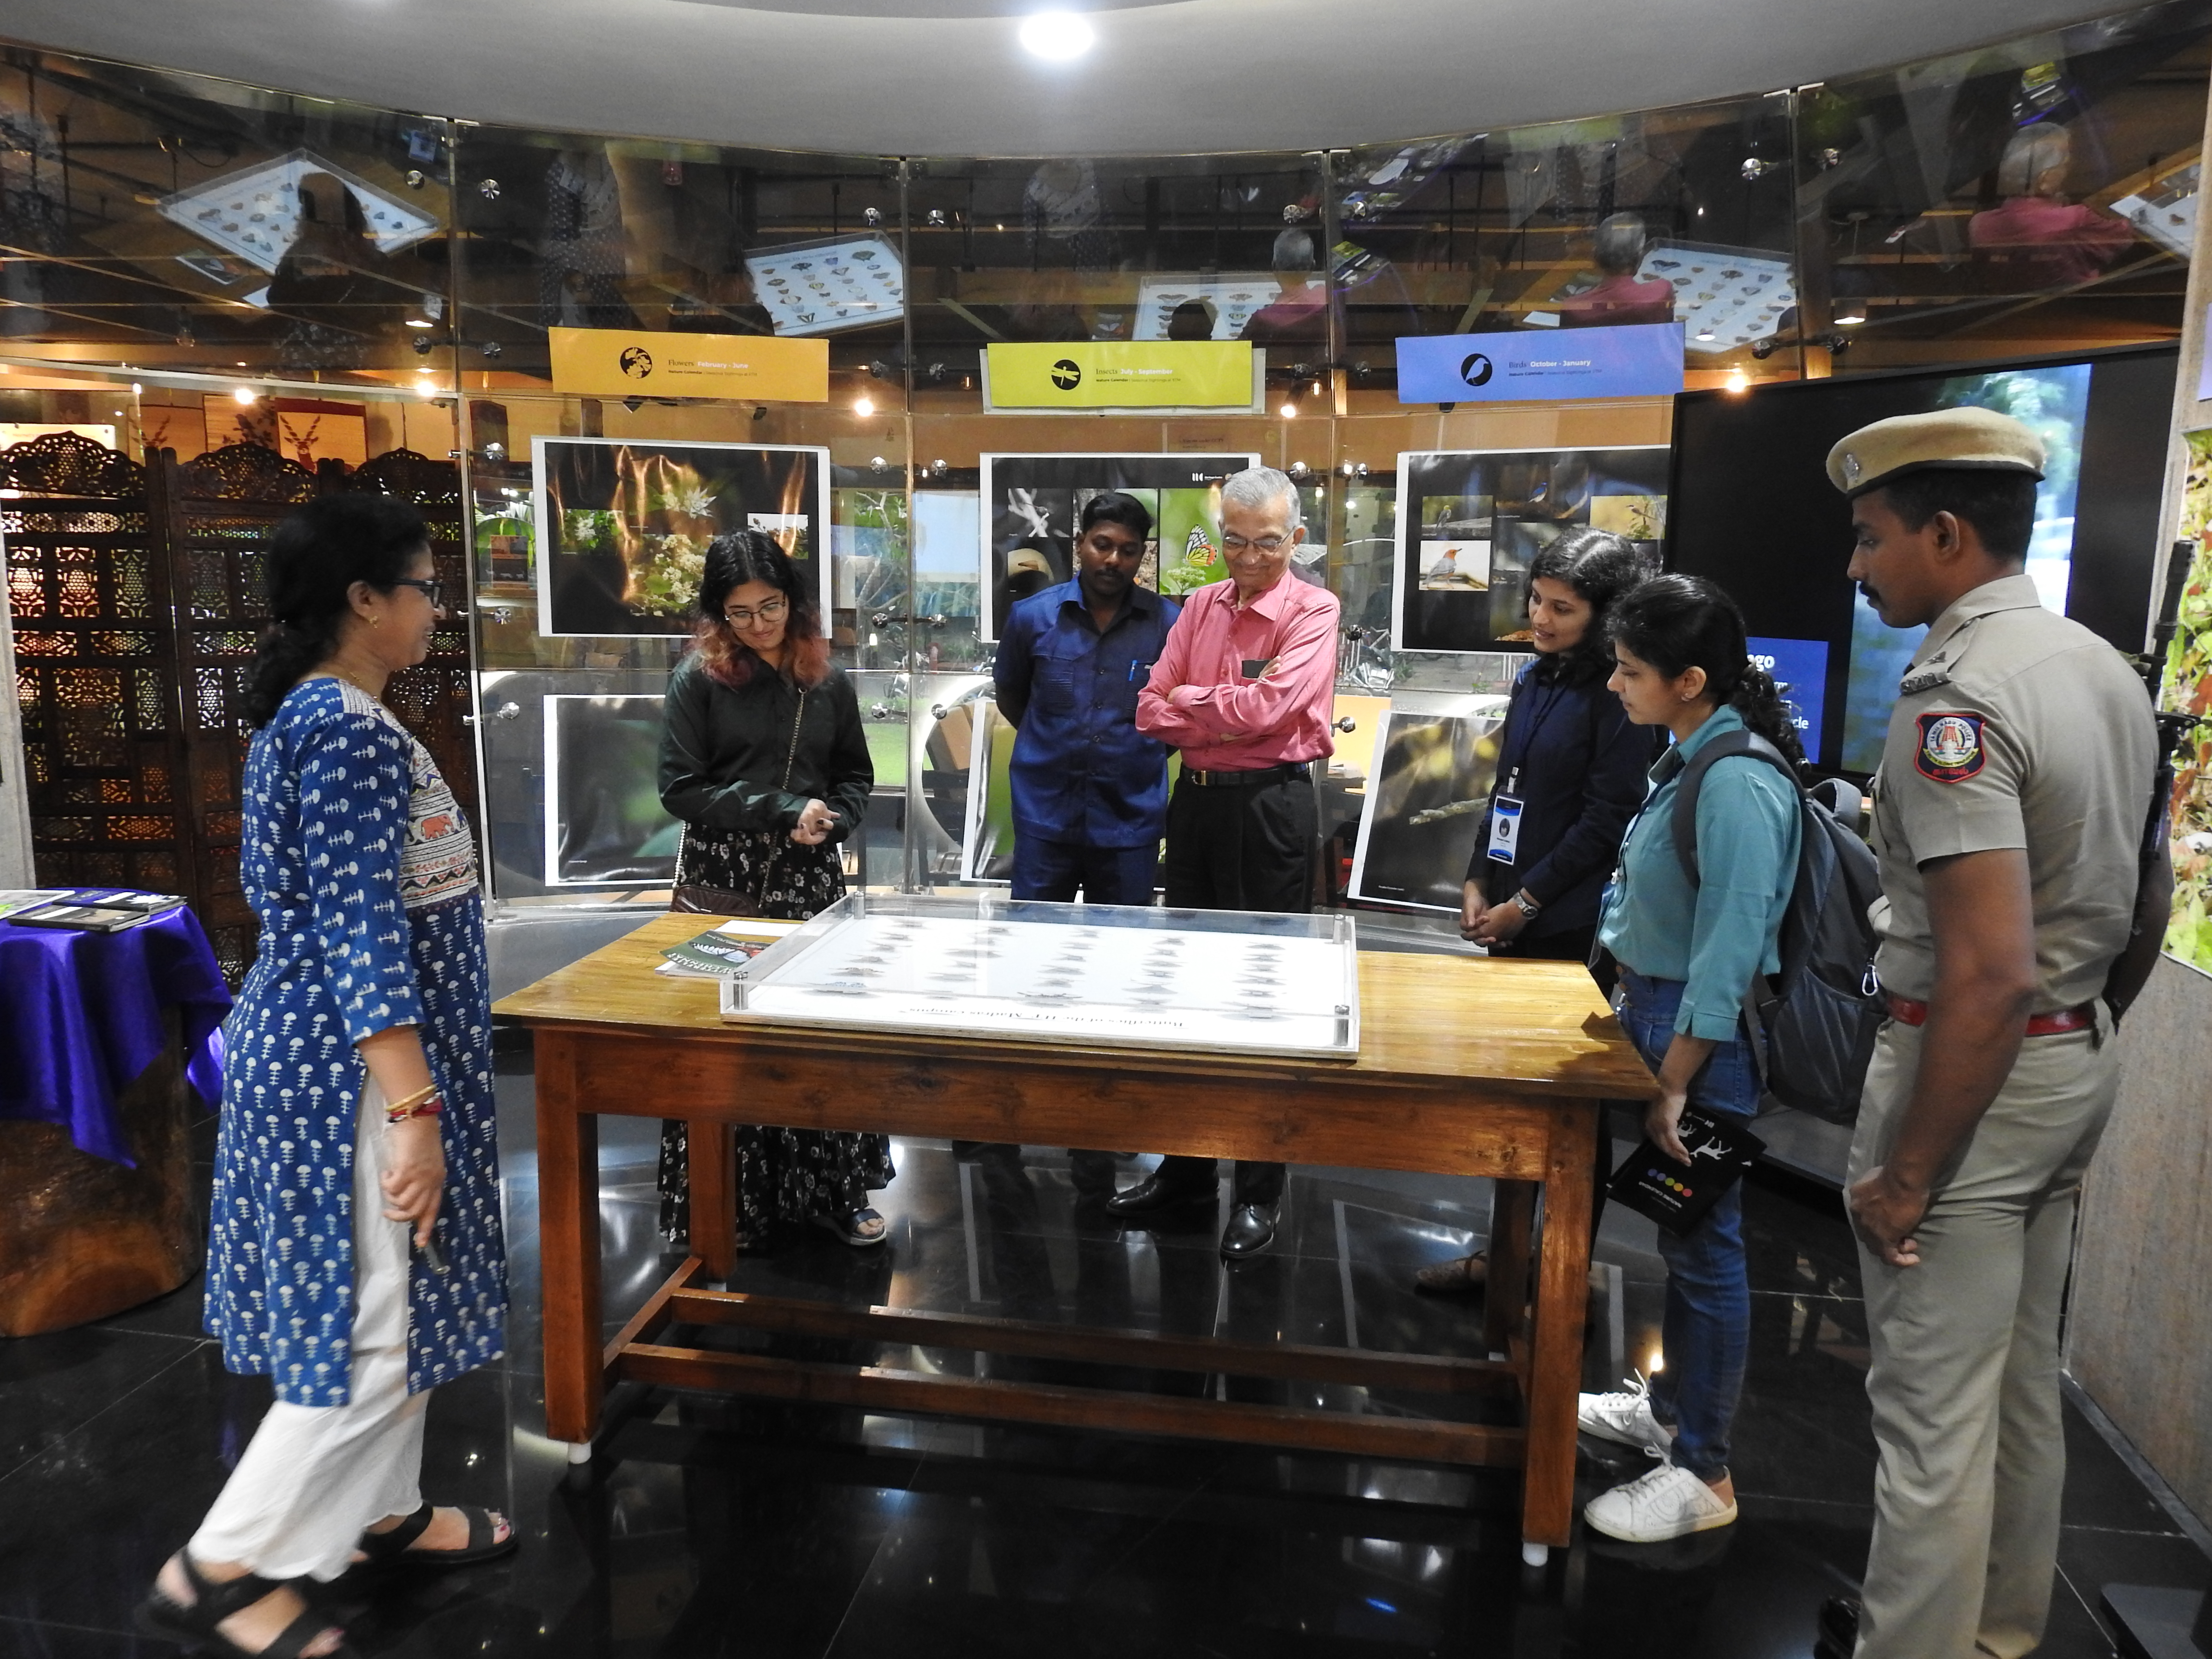 Dr. Kakodkar views the butterfly exhibit of the Nature Calendar exhibition